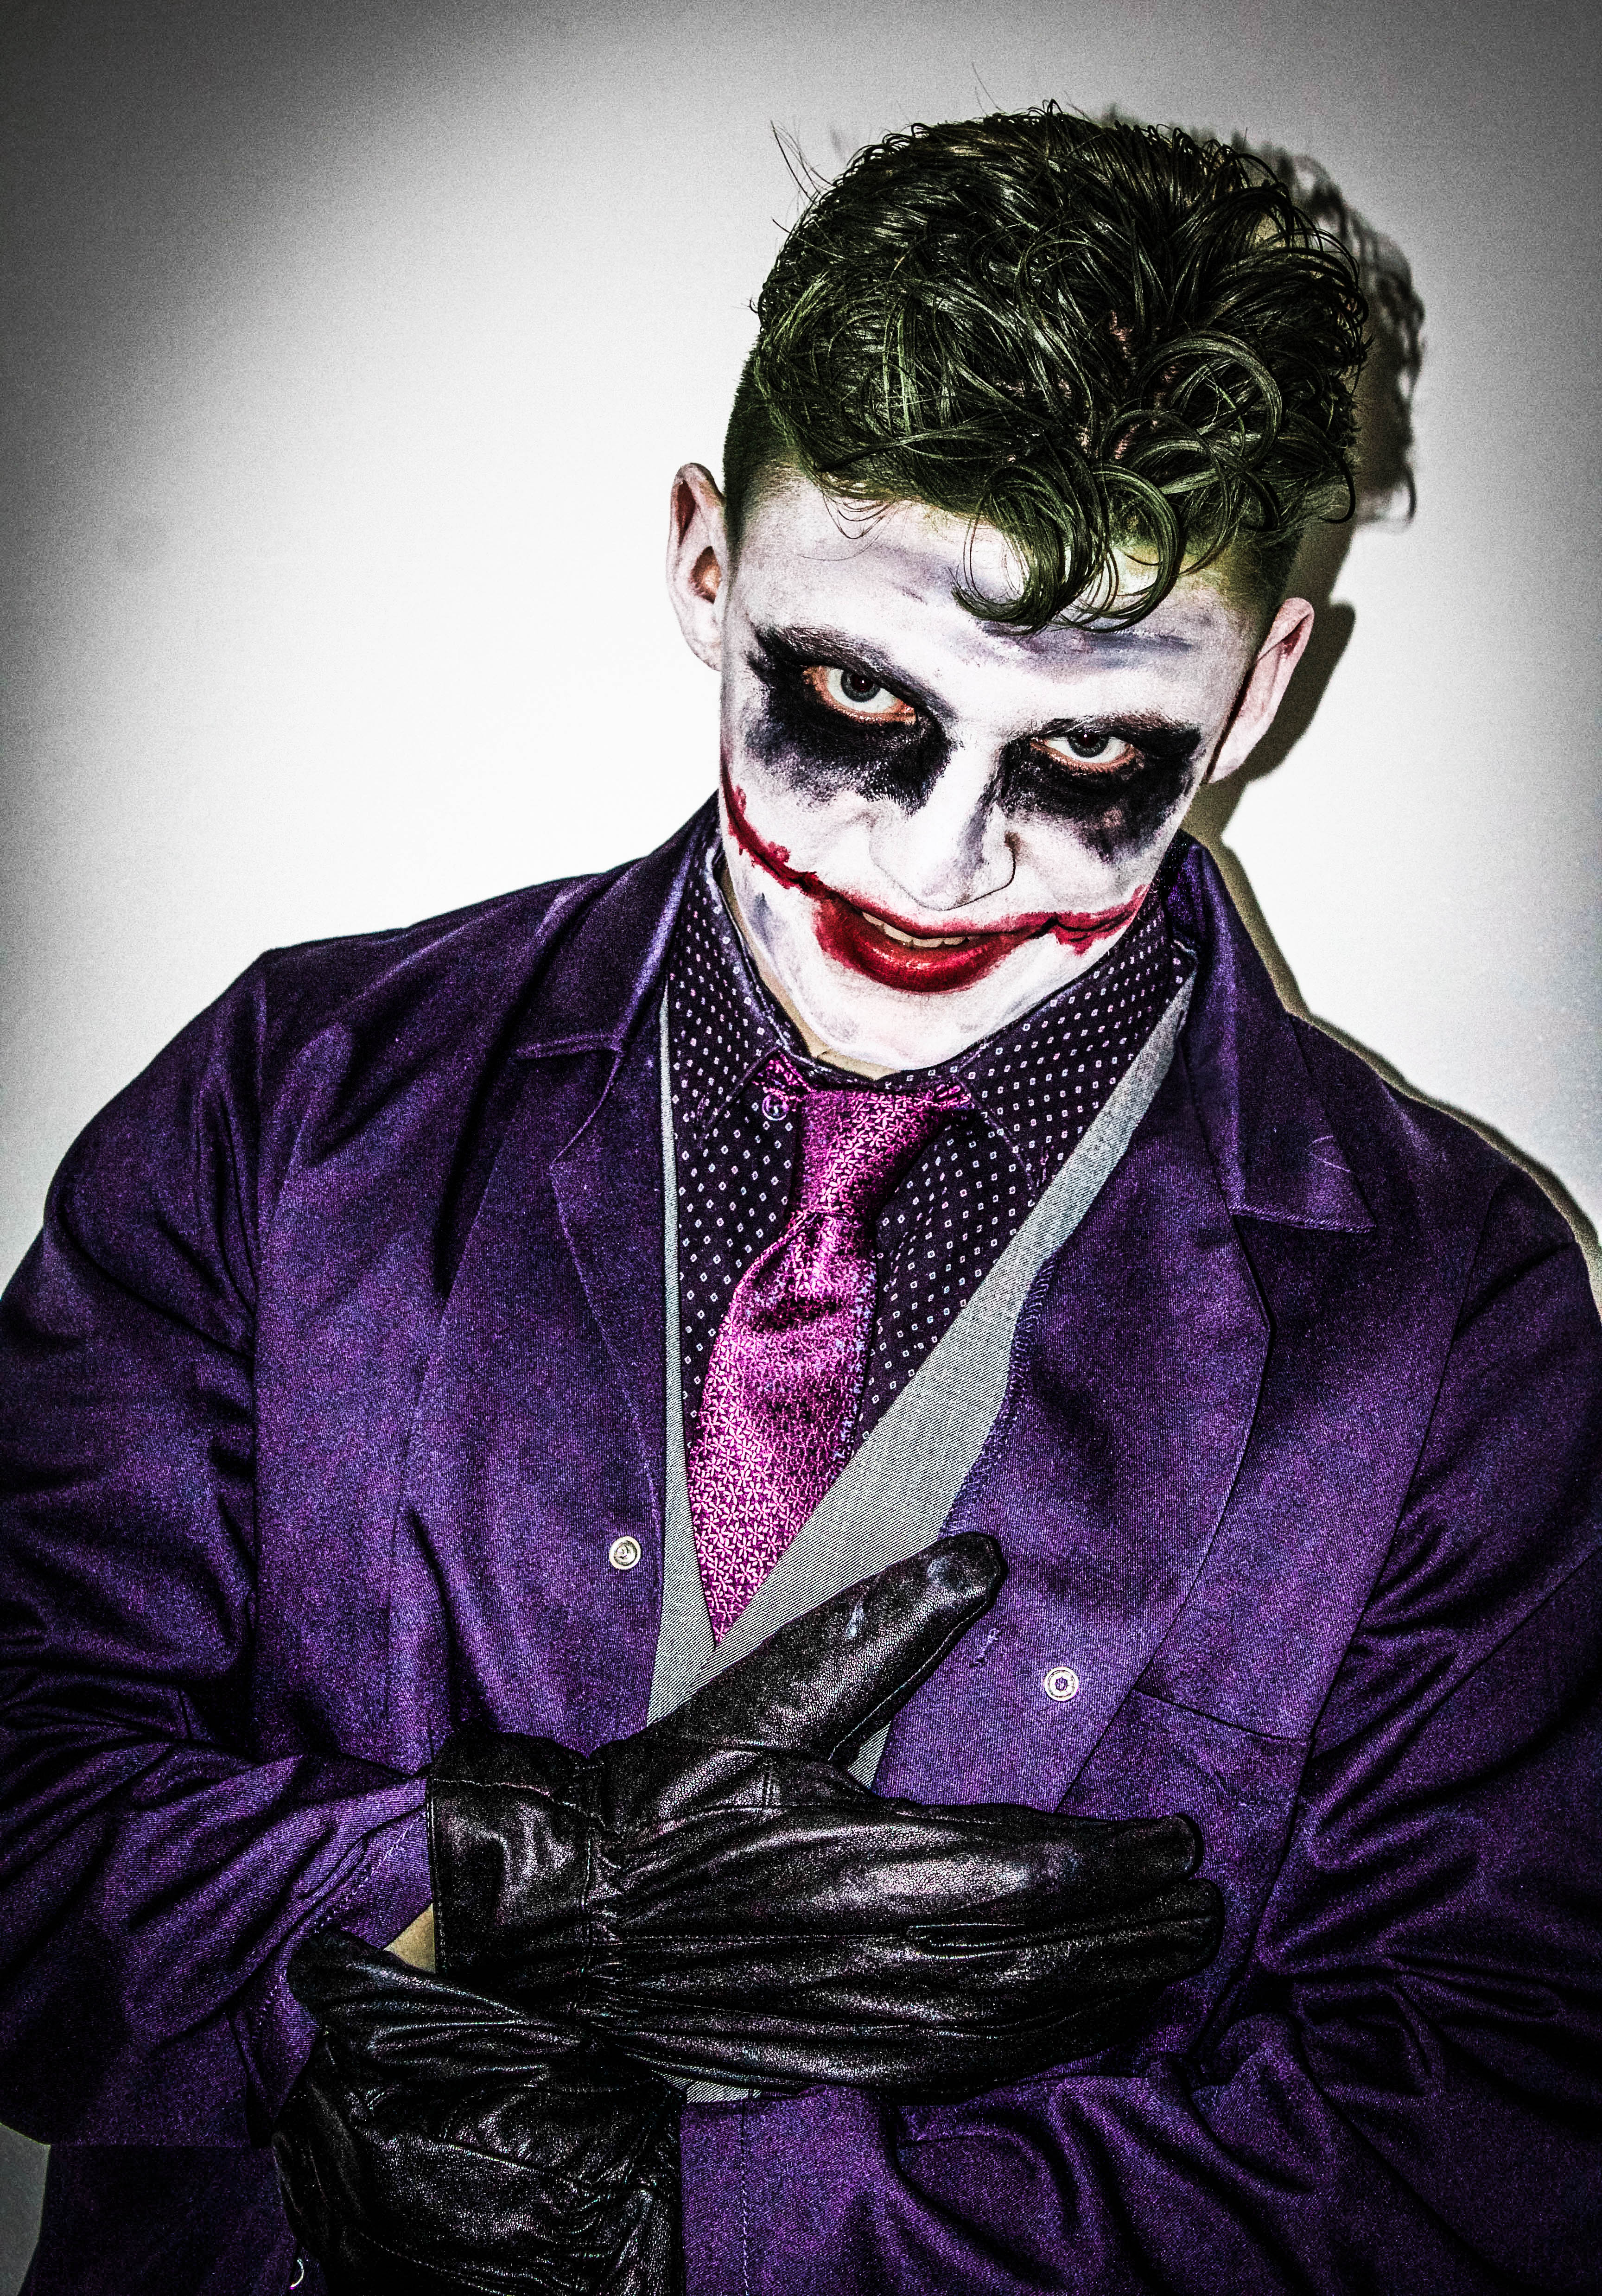 Joker - Personal Attempt.